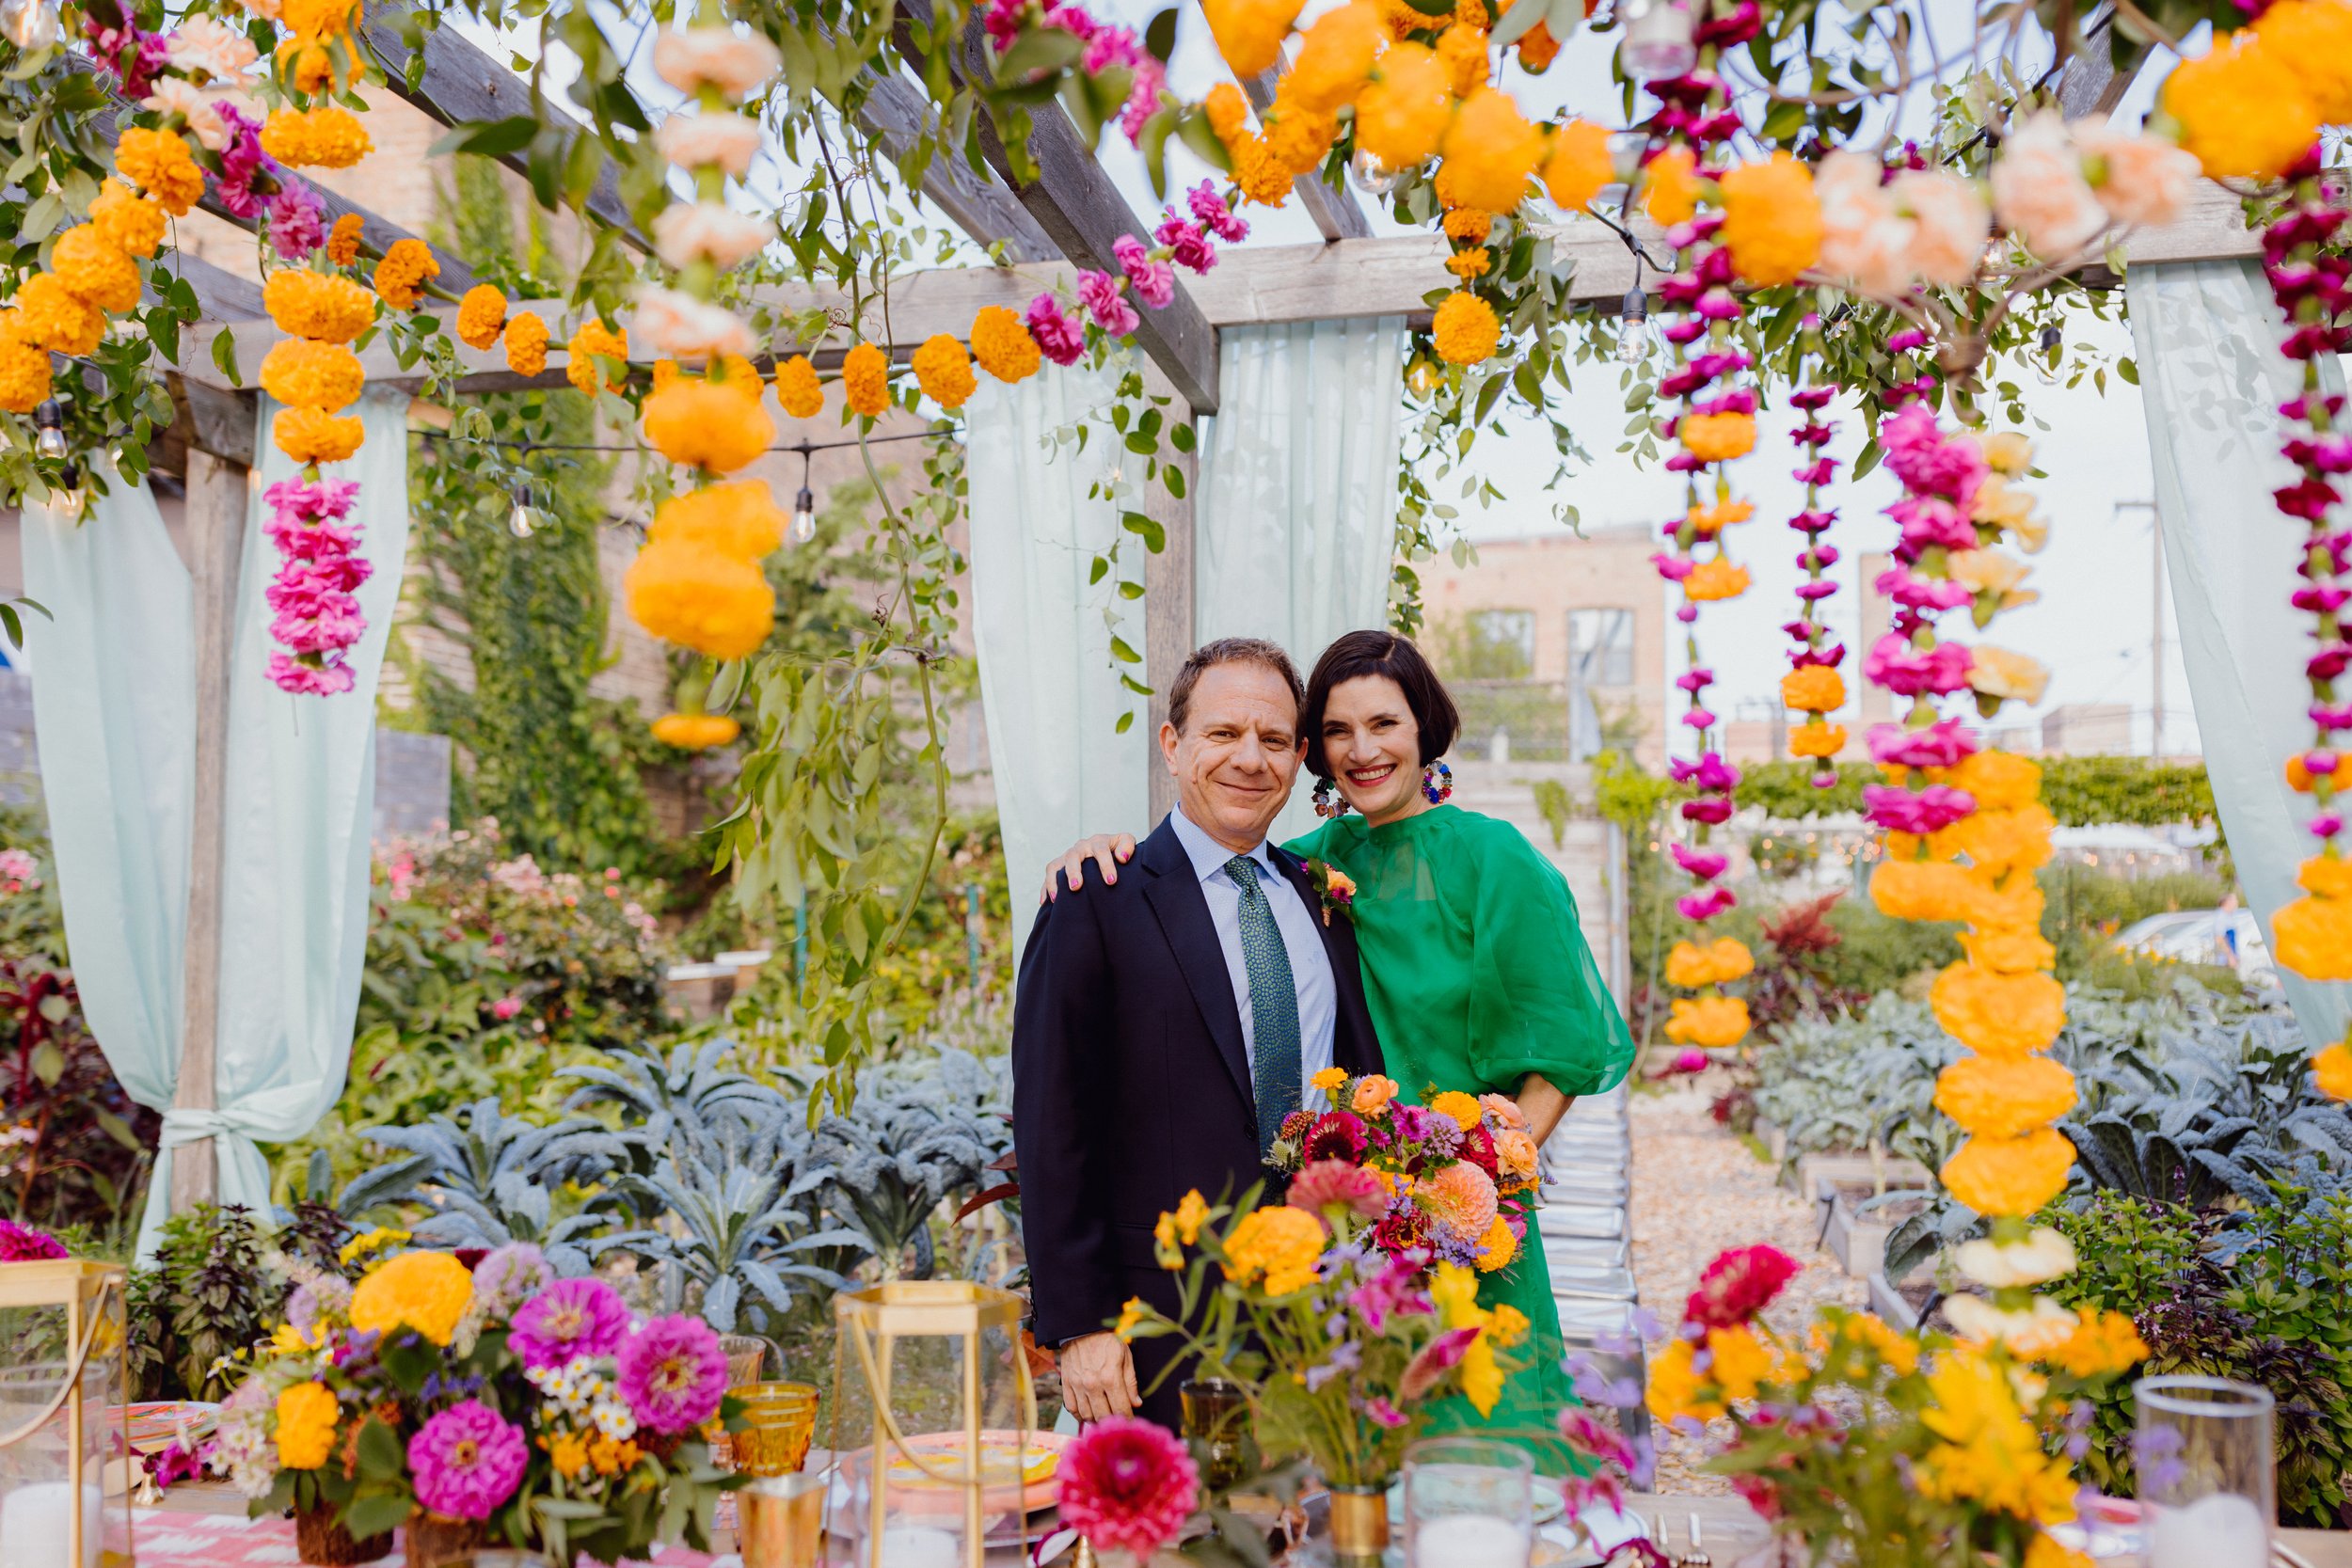 Jennifer + Tad's Flower-Filled Intimate Wedding